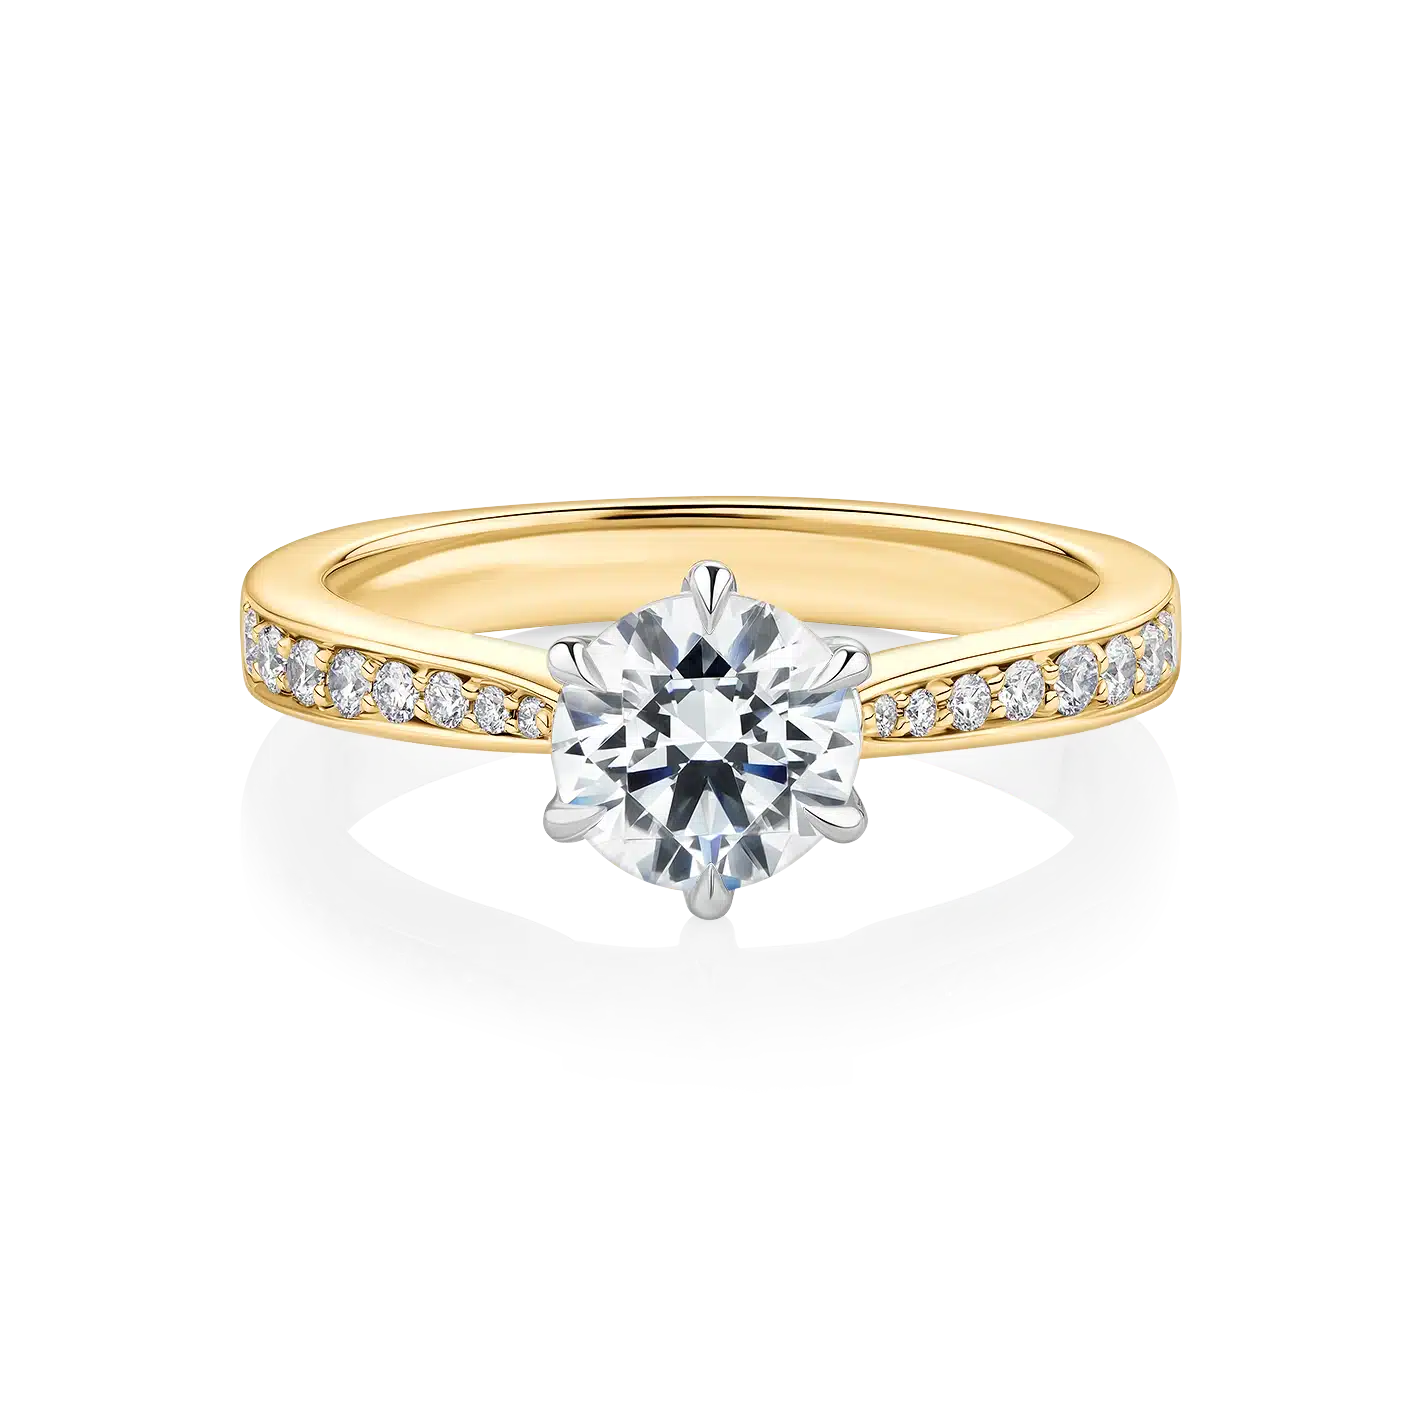 Acacia-Yellow-Gold-Two-Tone-Round-6-claw-Grain-Set-Diamond-Engagement-Ring